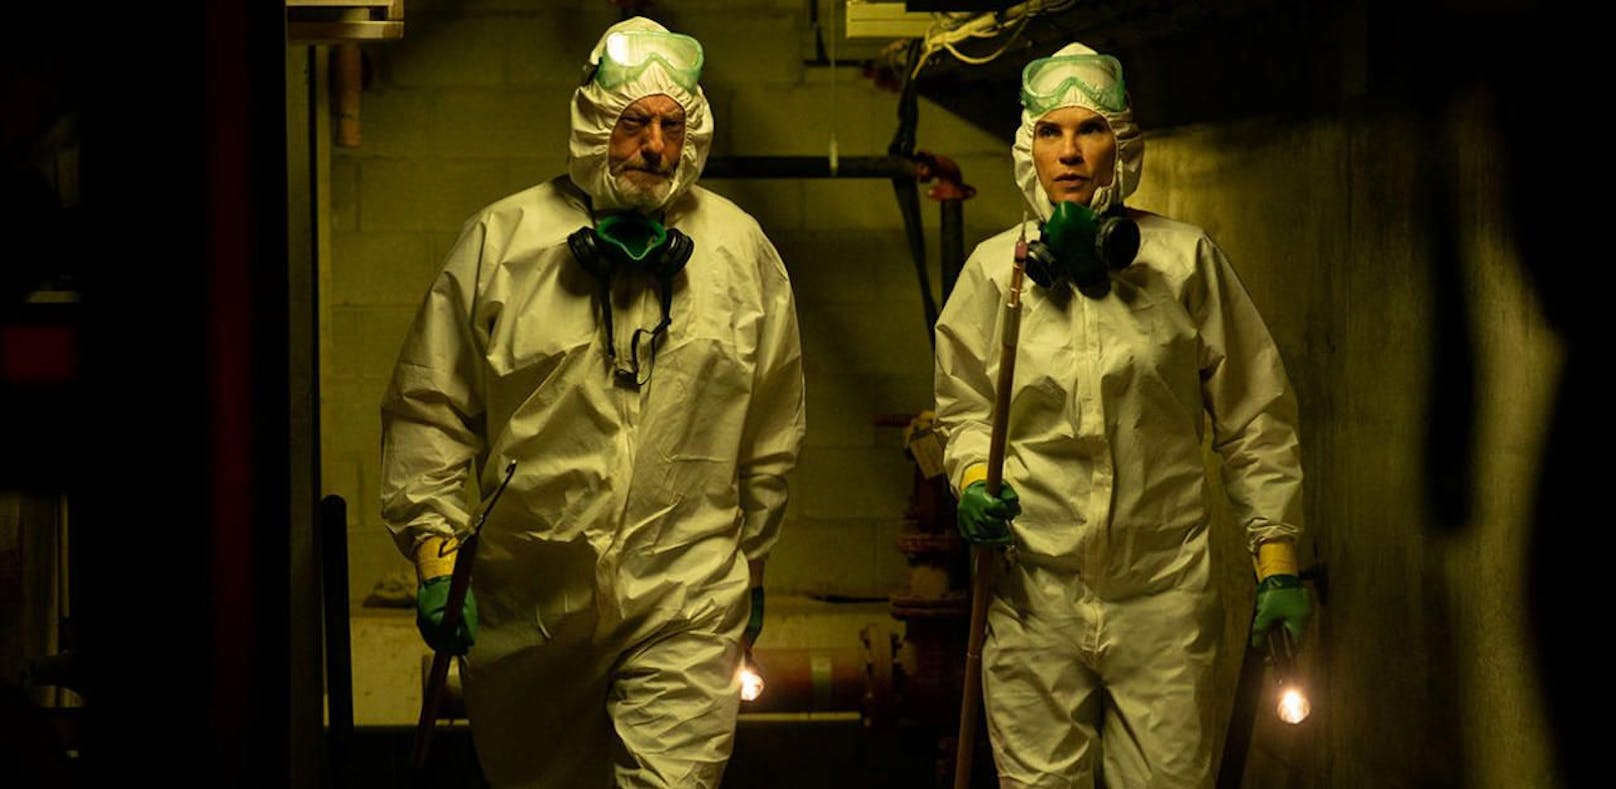 Regisseur über neue Ebola-Serie: "Cast war paranoid"